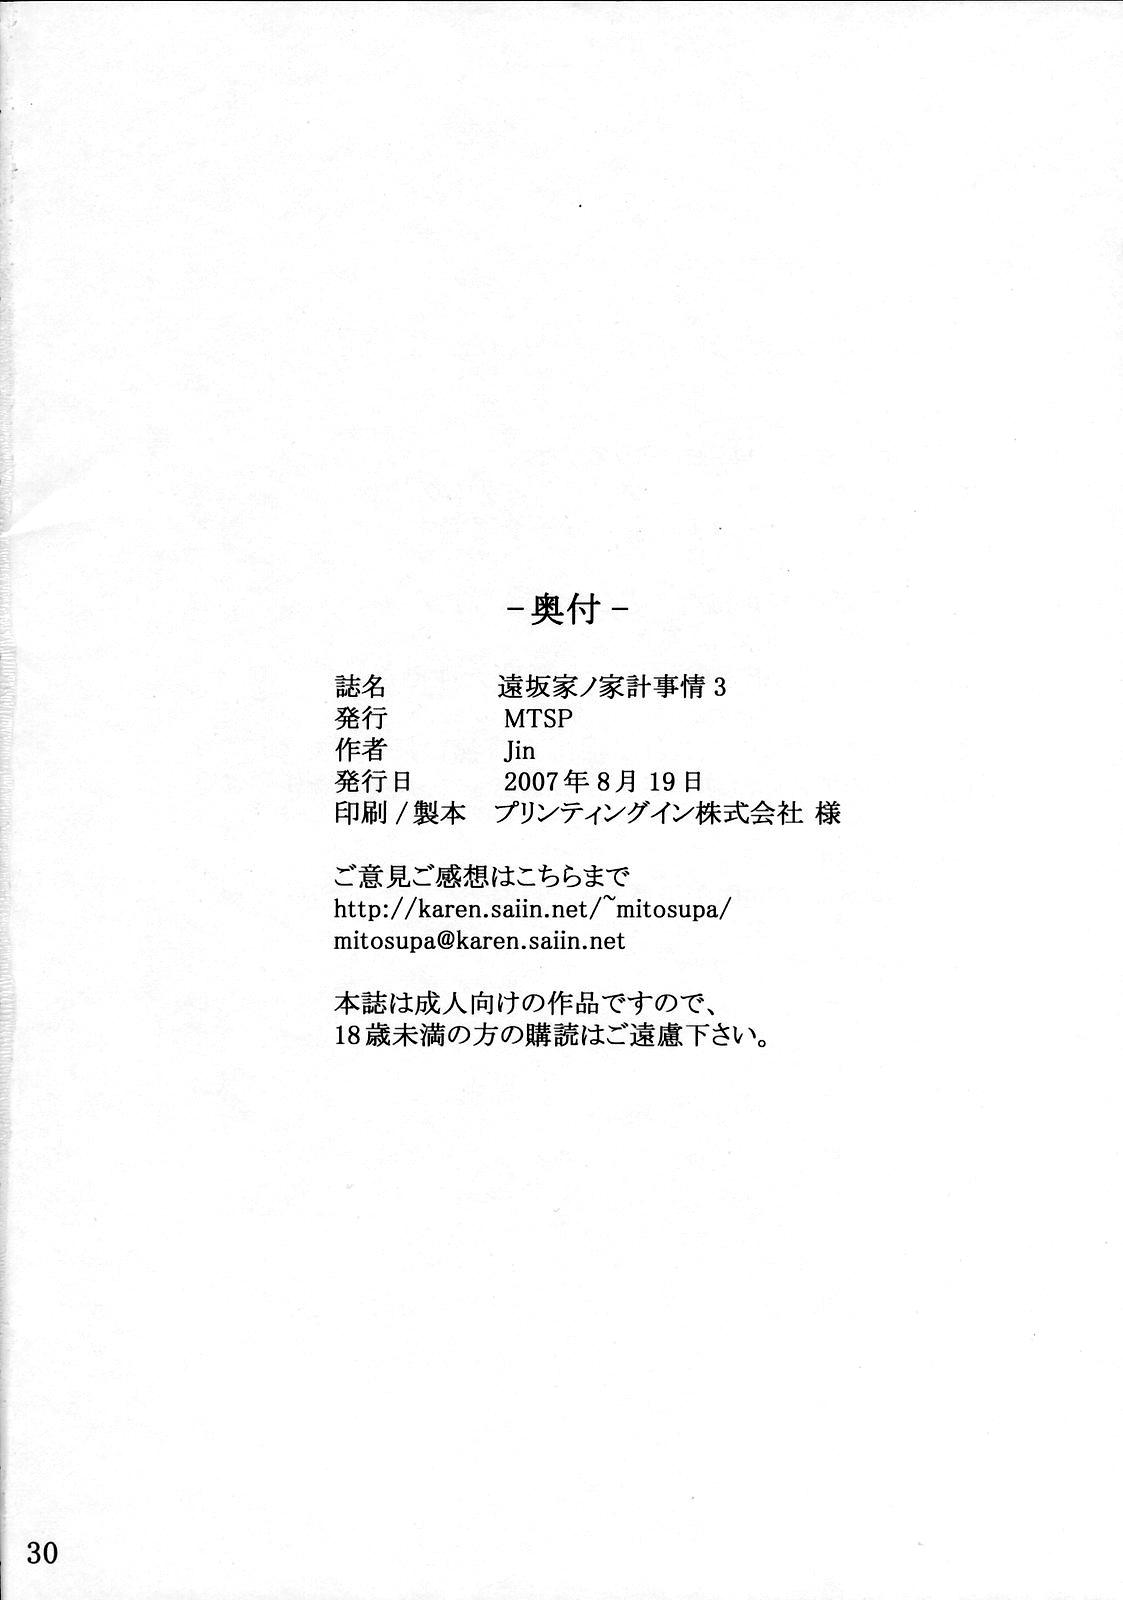 Gayhardcore Tohsaka-ke no Kakei Jijou 3 - Fate stay night Point Of View - Page 29